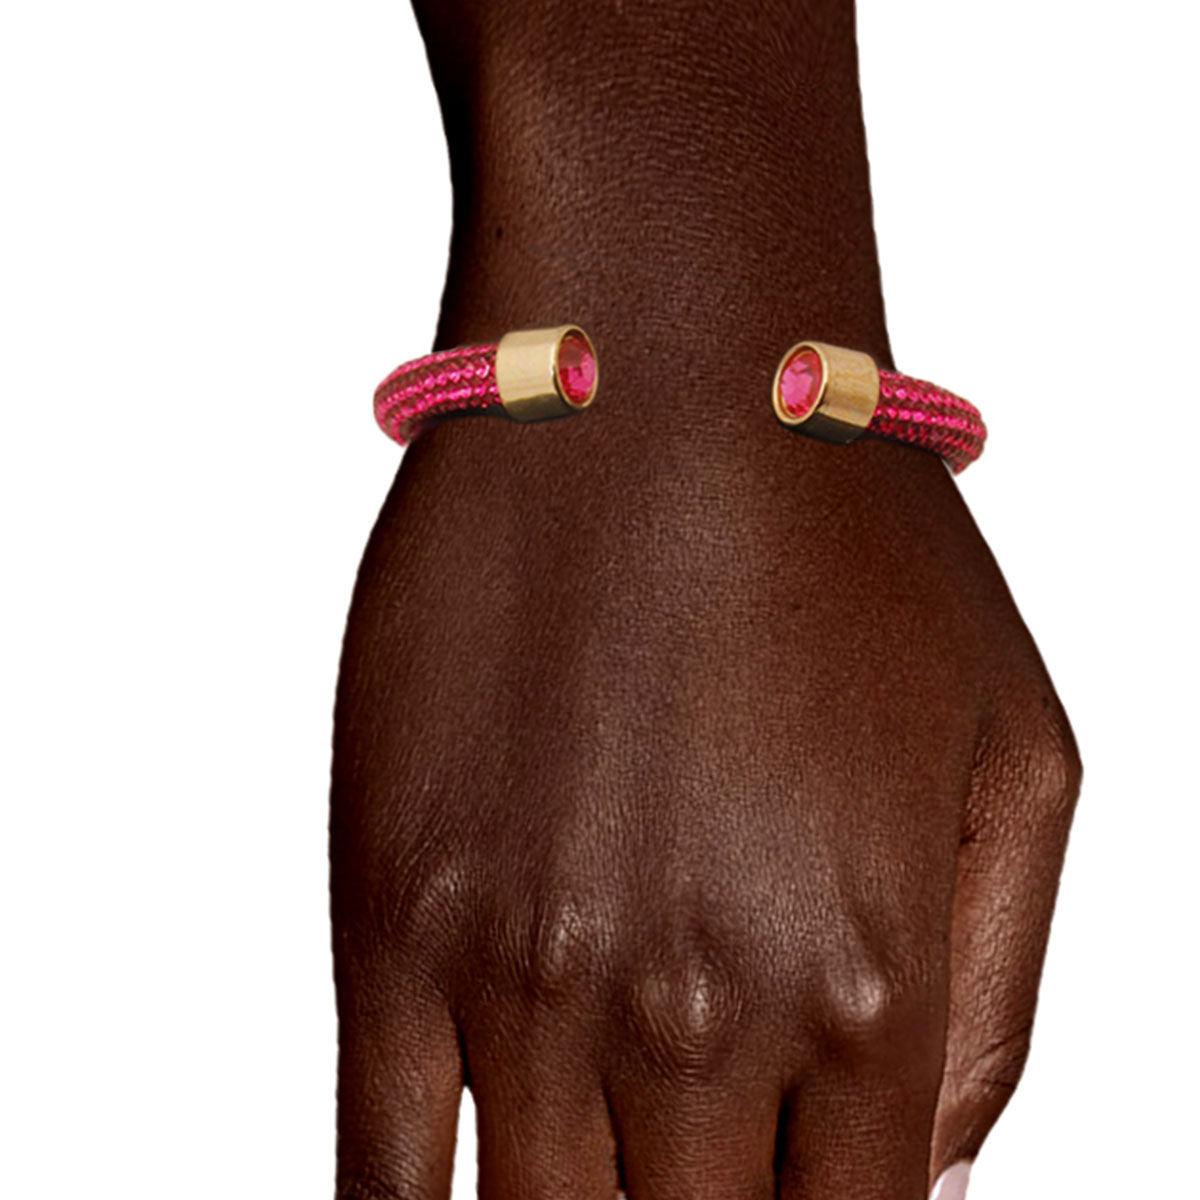 Sparkle in Style: Pink Rhinestone Cuff Bangle Bracelet